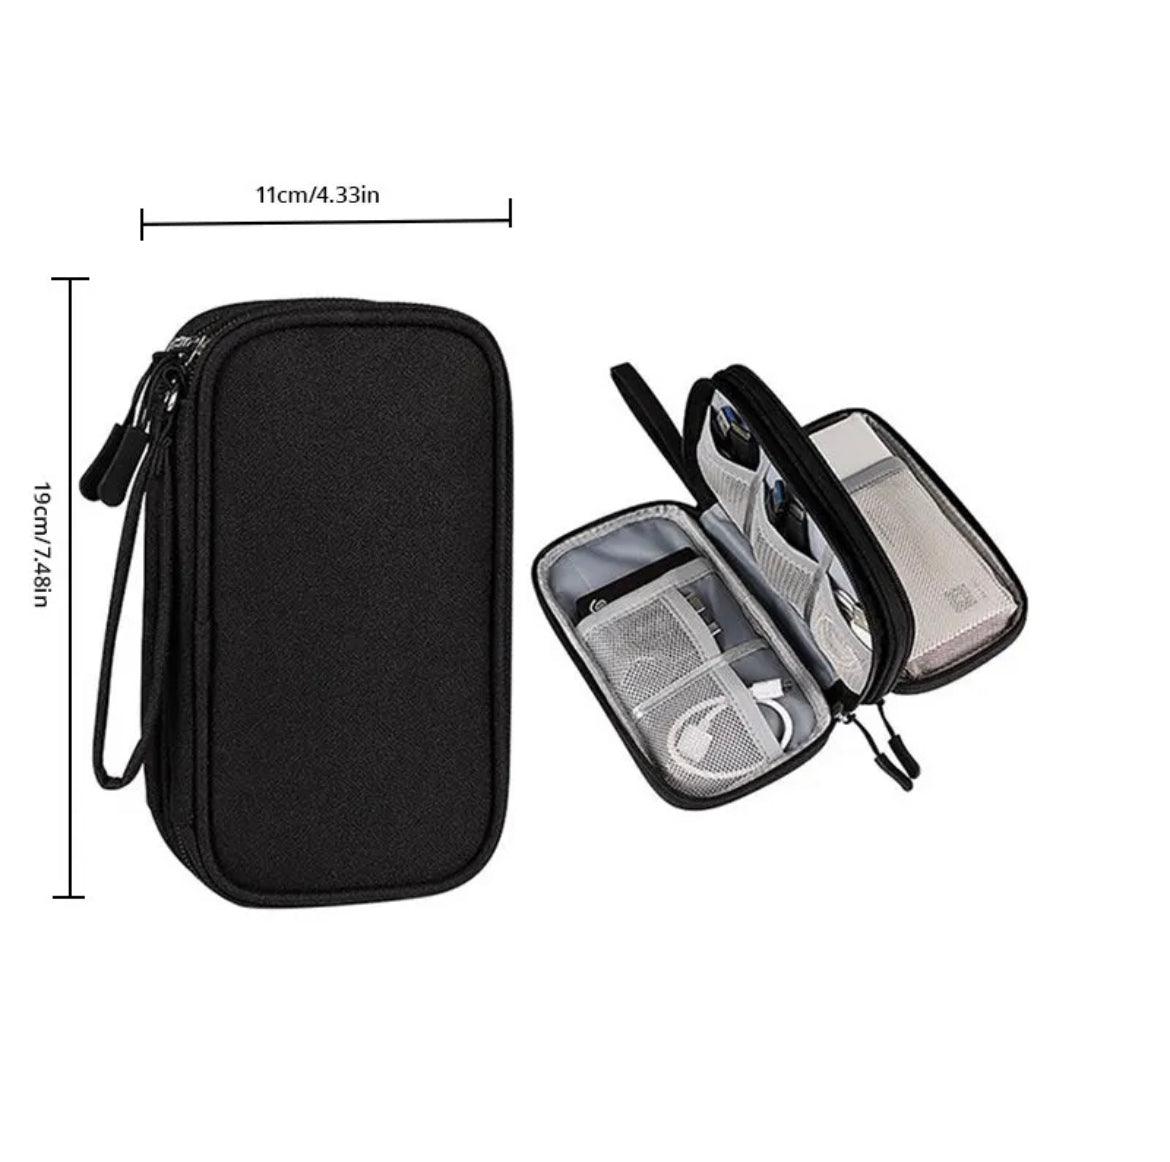 Digital Product & Cord Storage Case, USB Data Cable Organizer, Portable Travel